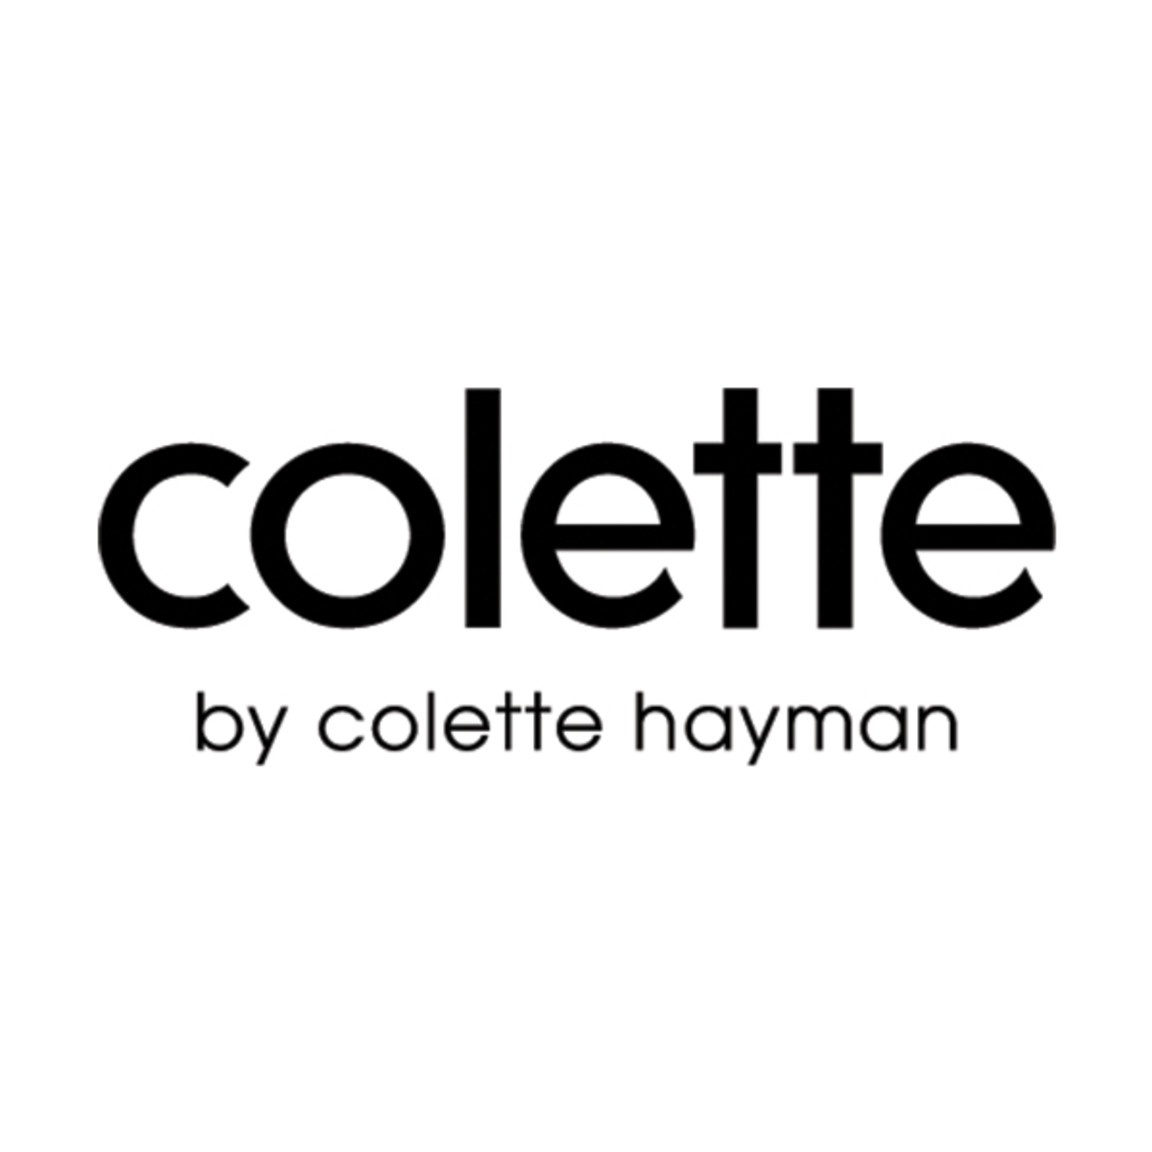 100% WORKING Colette Hayman Discount Code ([month] [year]) 2